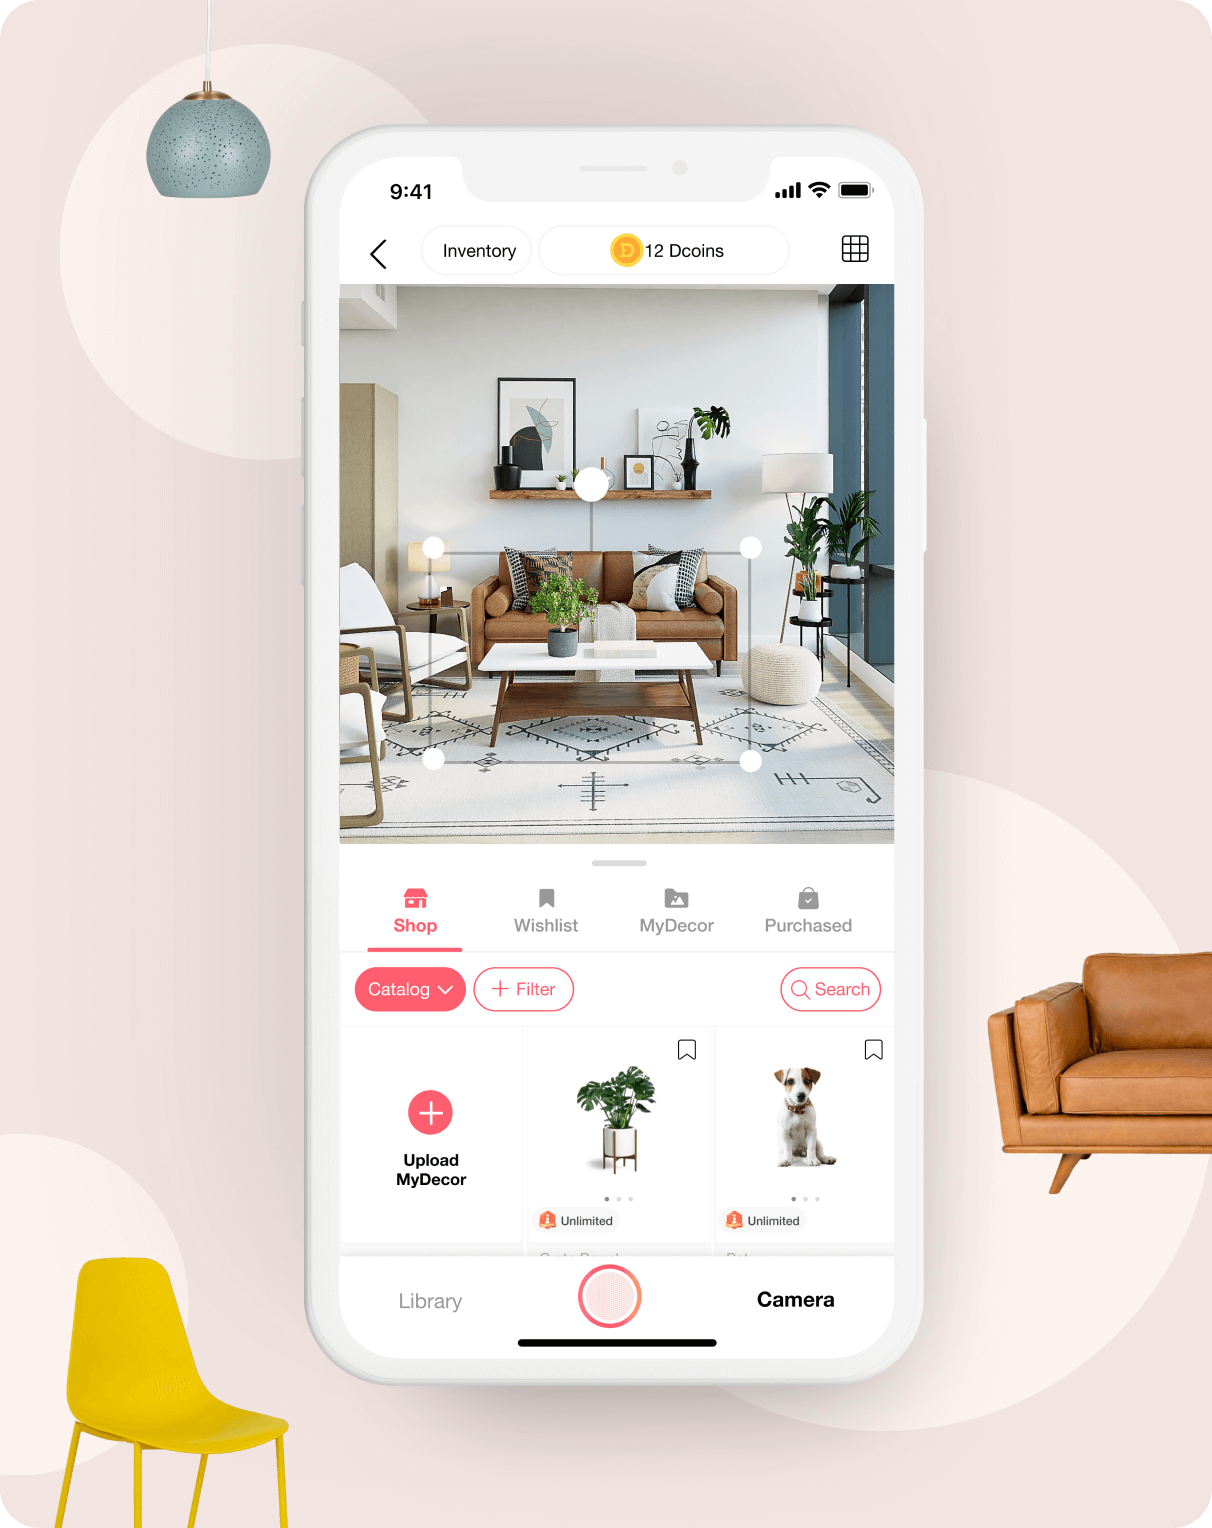 The Leading Home Design App That Makes Shopping Enjoyable